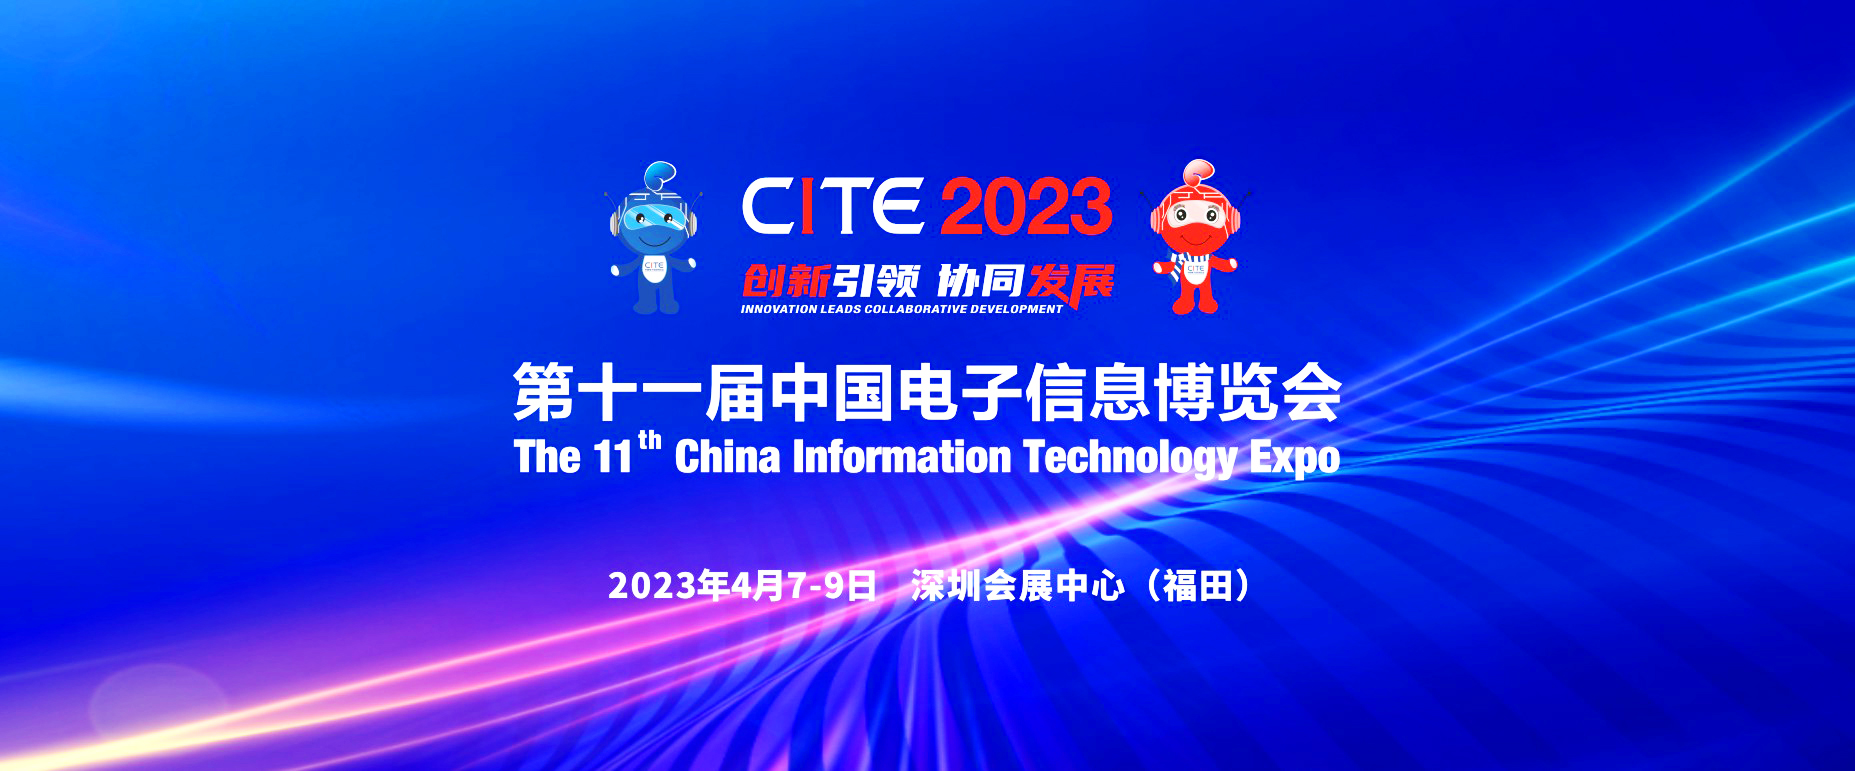 CITE2023|第十一届中国电子信息博览会邀请函招展册